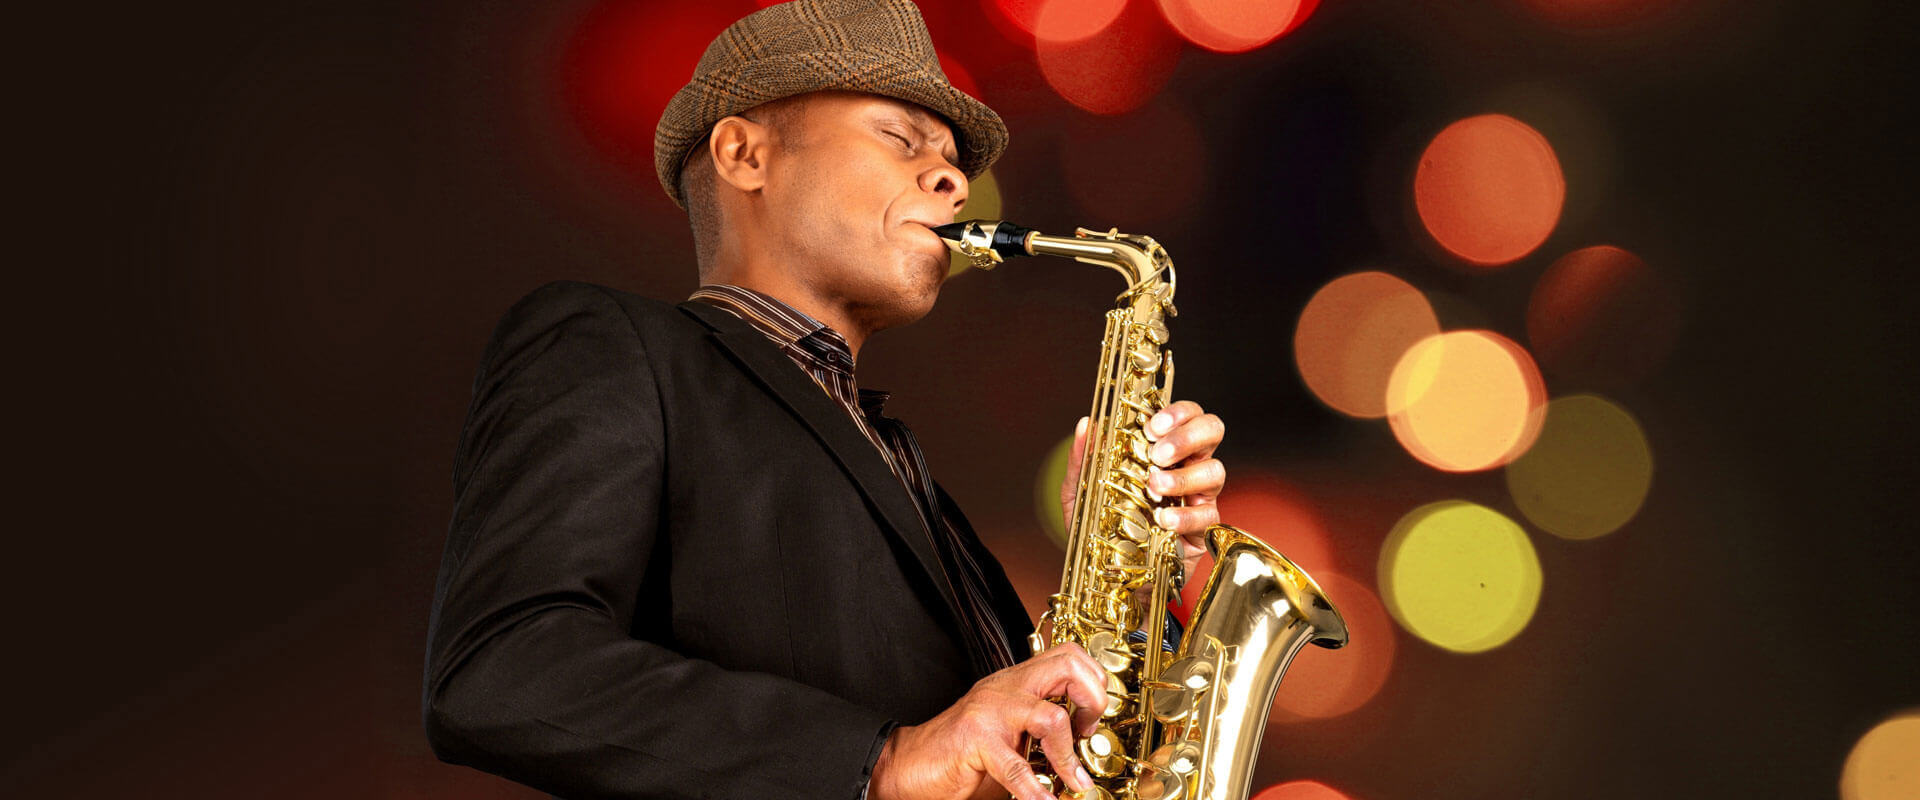 Saxophone Lessons Dallas, TX